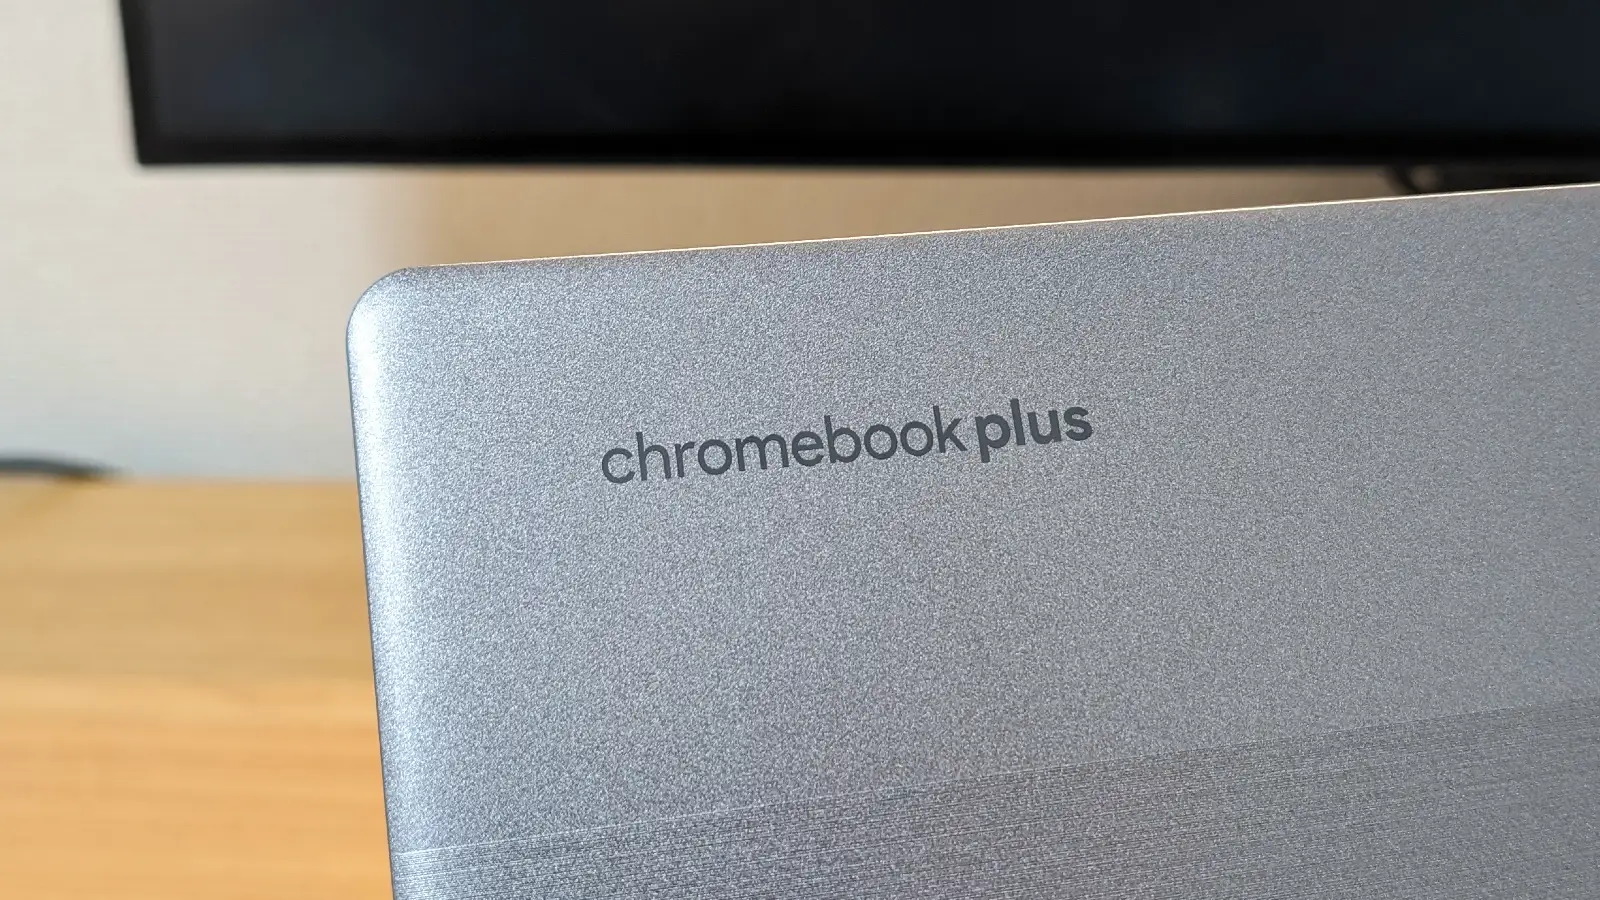 Google announces new, AI-powered Gemini features for Chromebook Plus